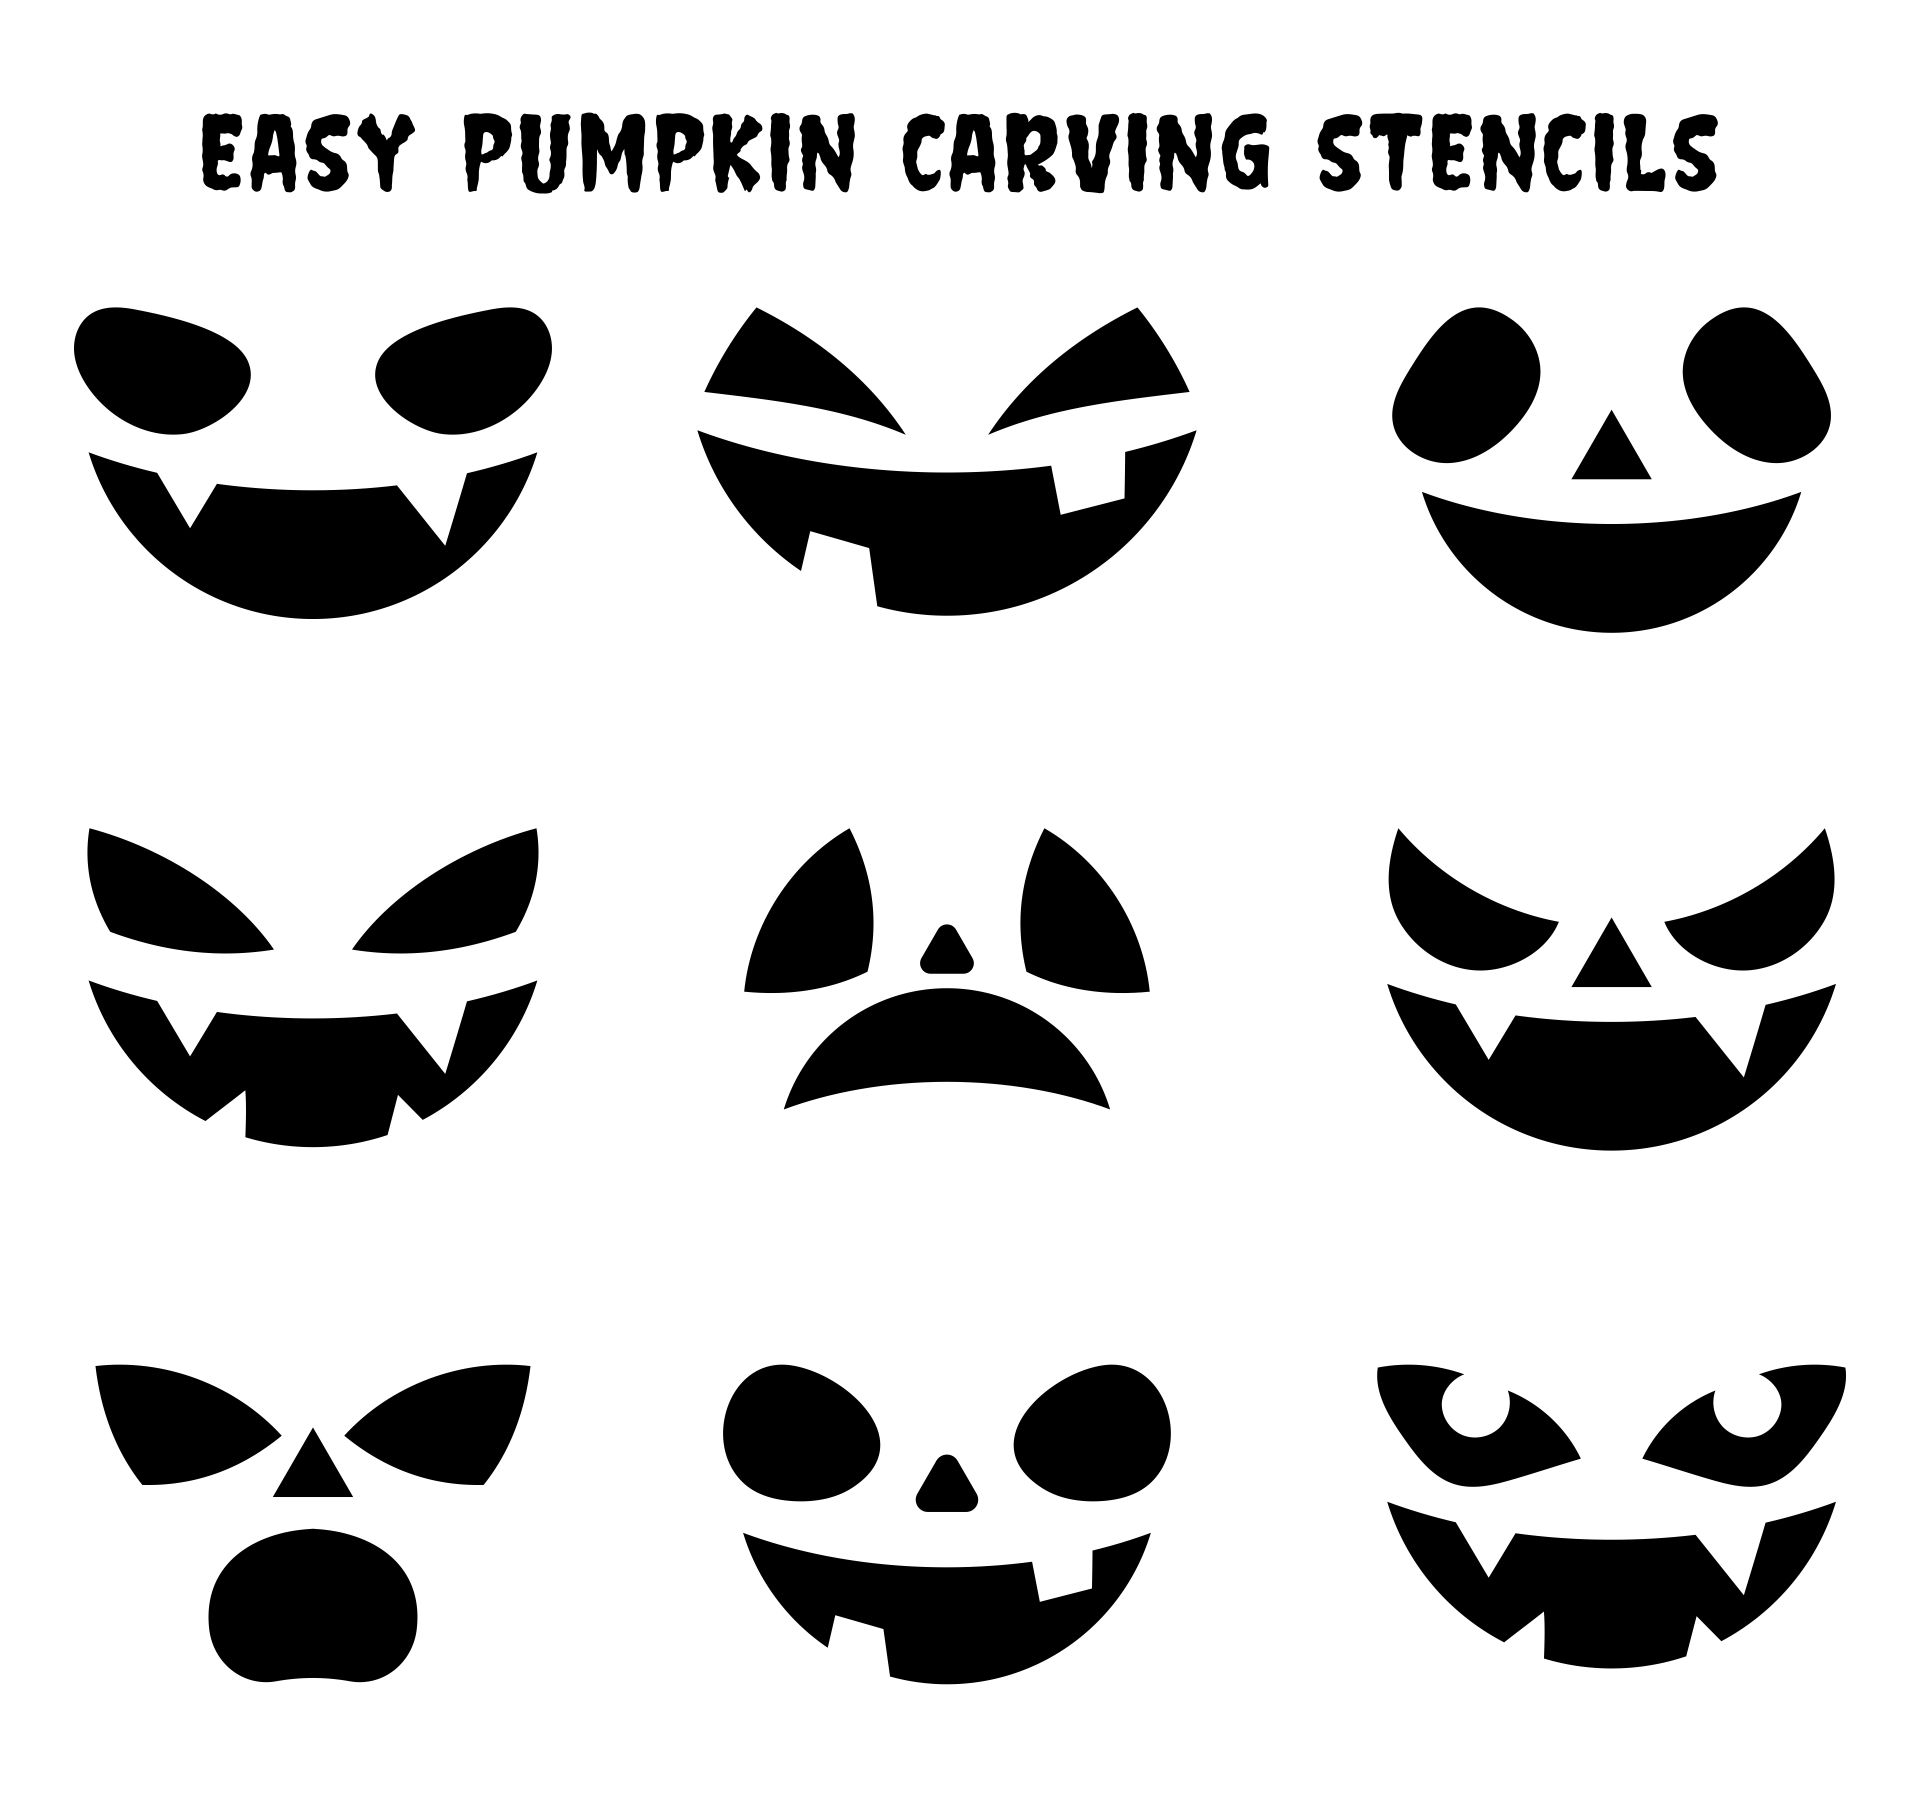 6 Best Images Of Easy Pumpkin Carving Patterns Free Printable Easy Pumpkin Carving Stencils 